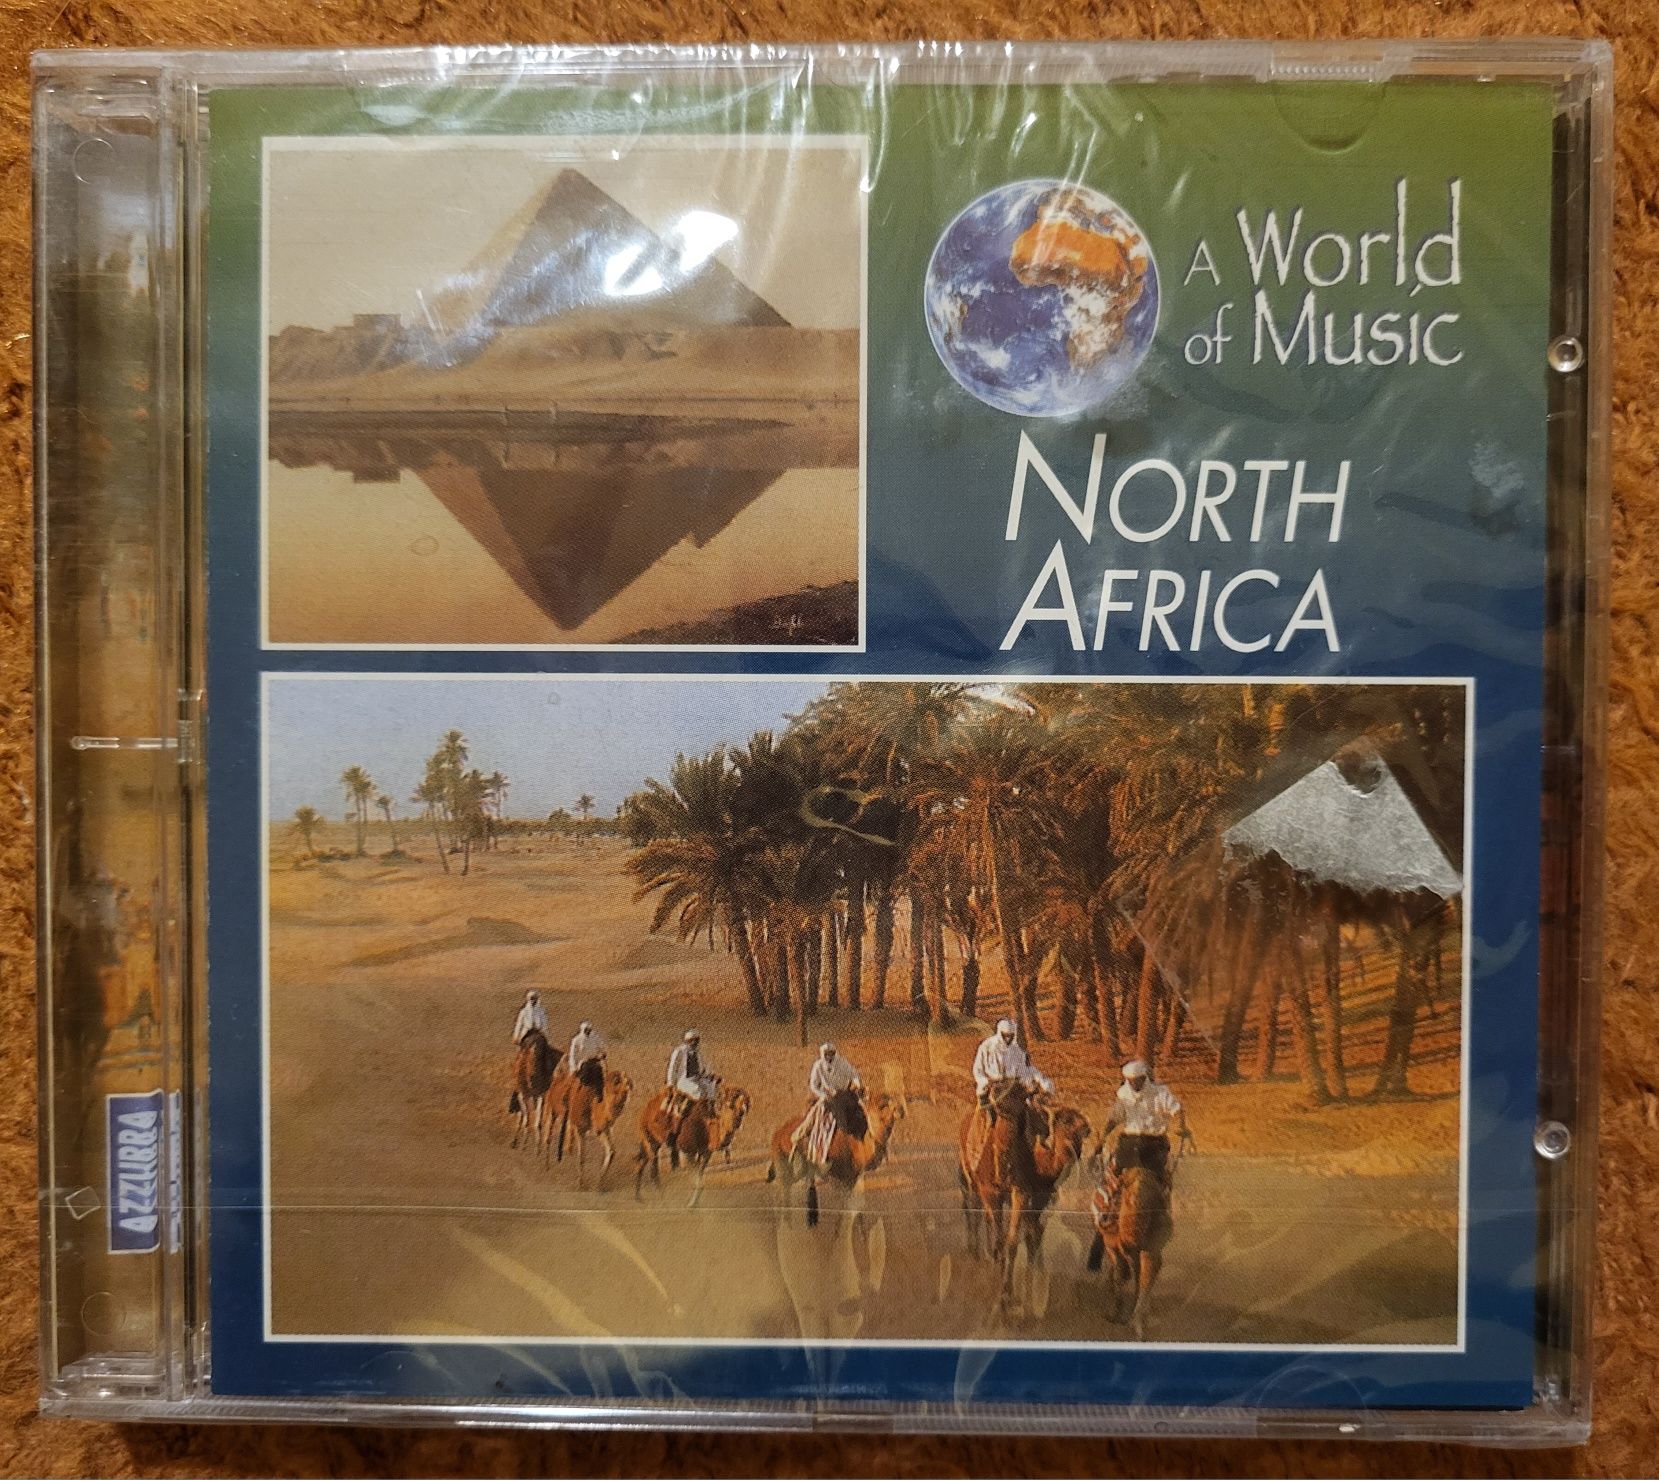 North Africa A World of Music CD
Płyta CD